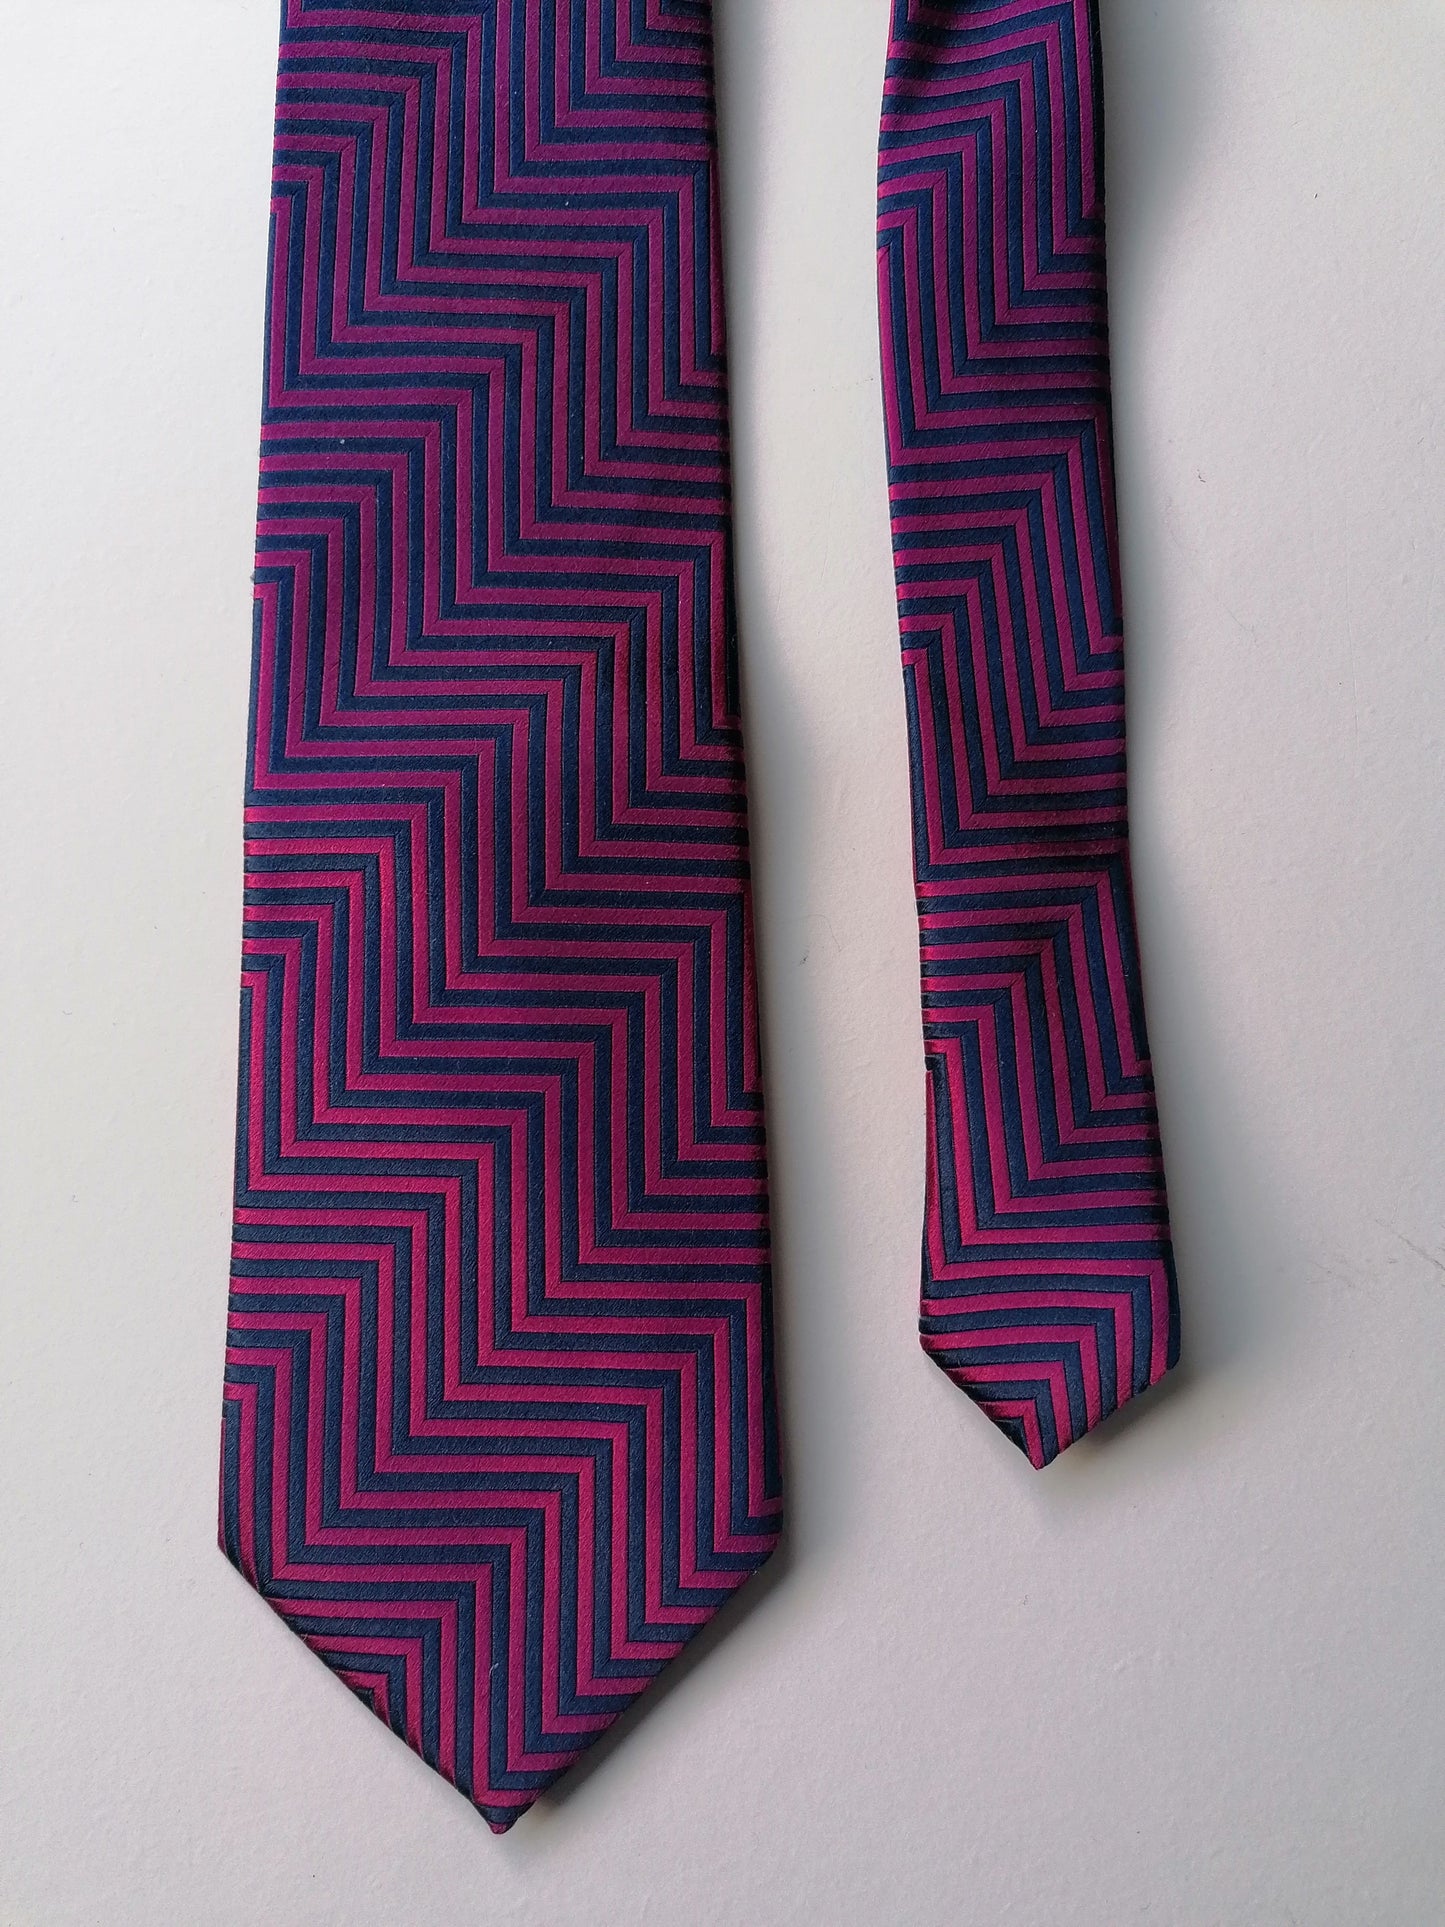 McGregor Distinction are tie. Purple blue motif.